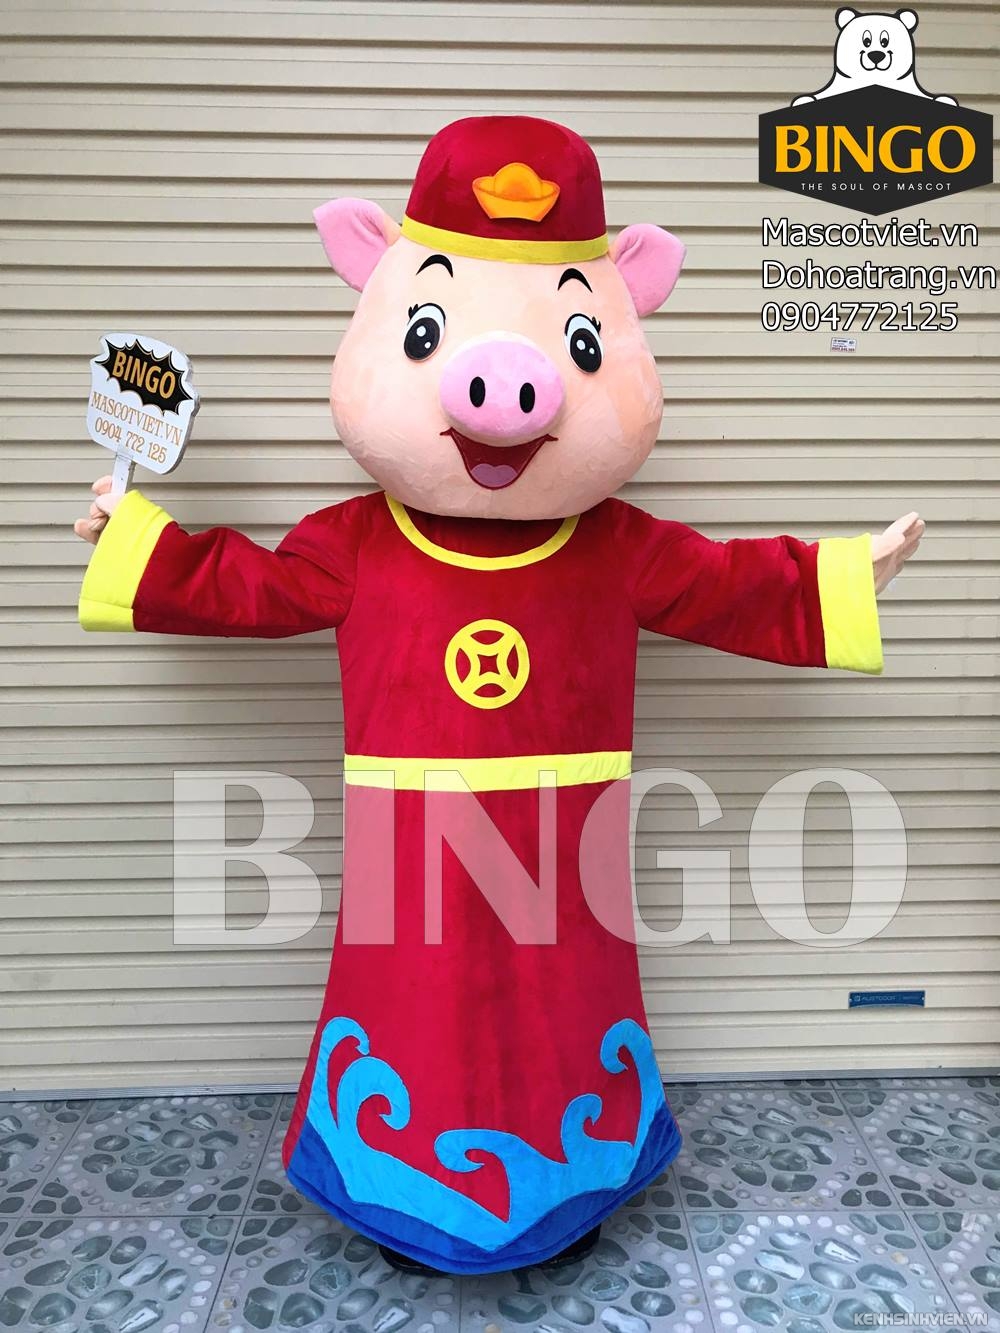 mascot-heo-than-tai-nu-bingo-costumes-0904772125.jpg